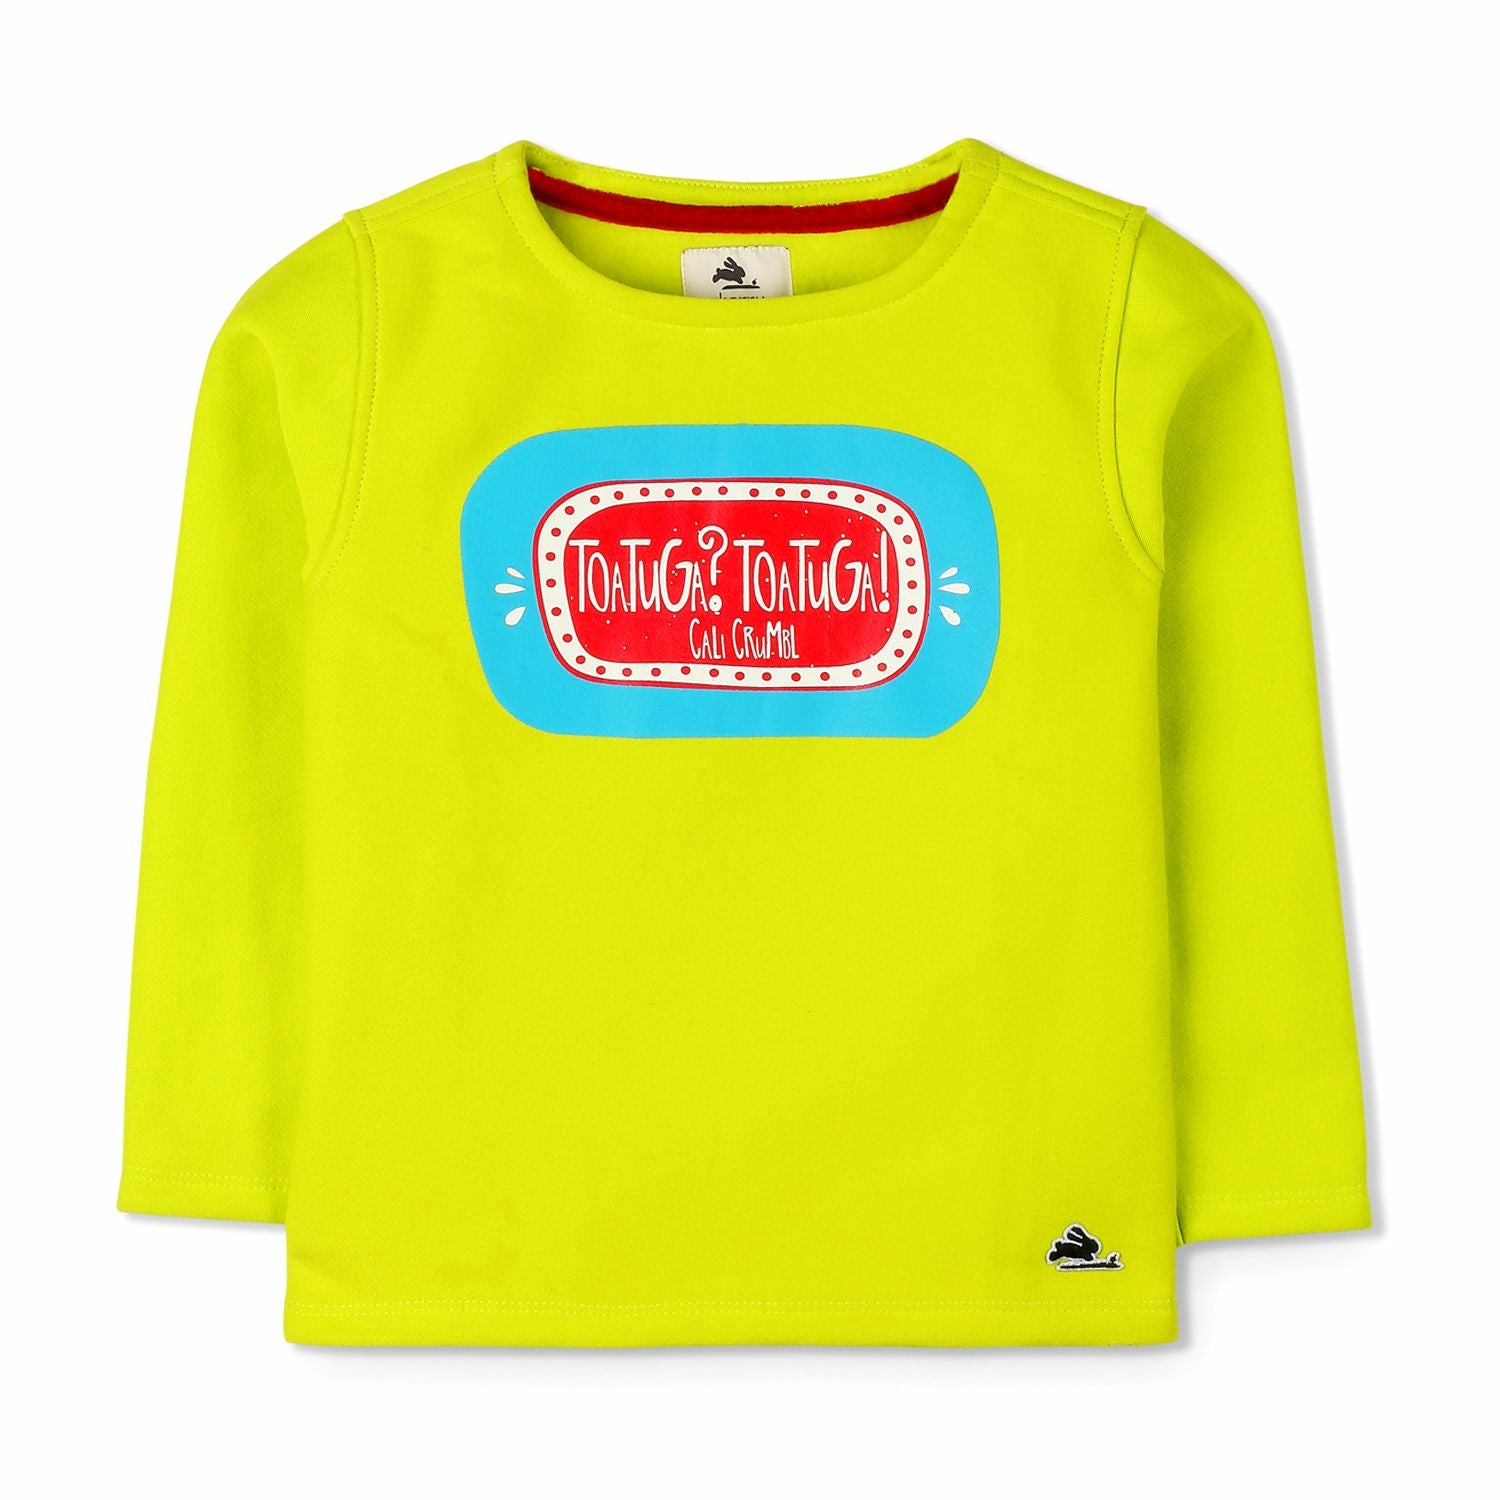 Spanish Tortuga Sweatshirt for Boys